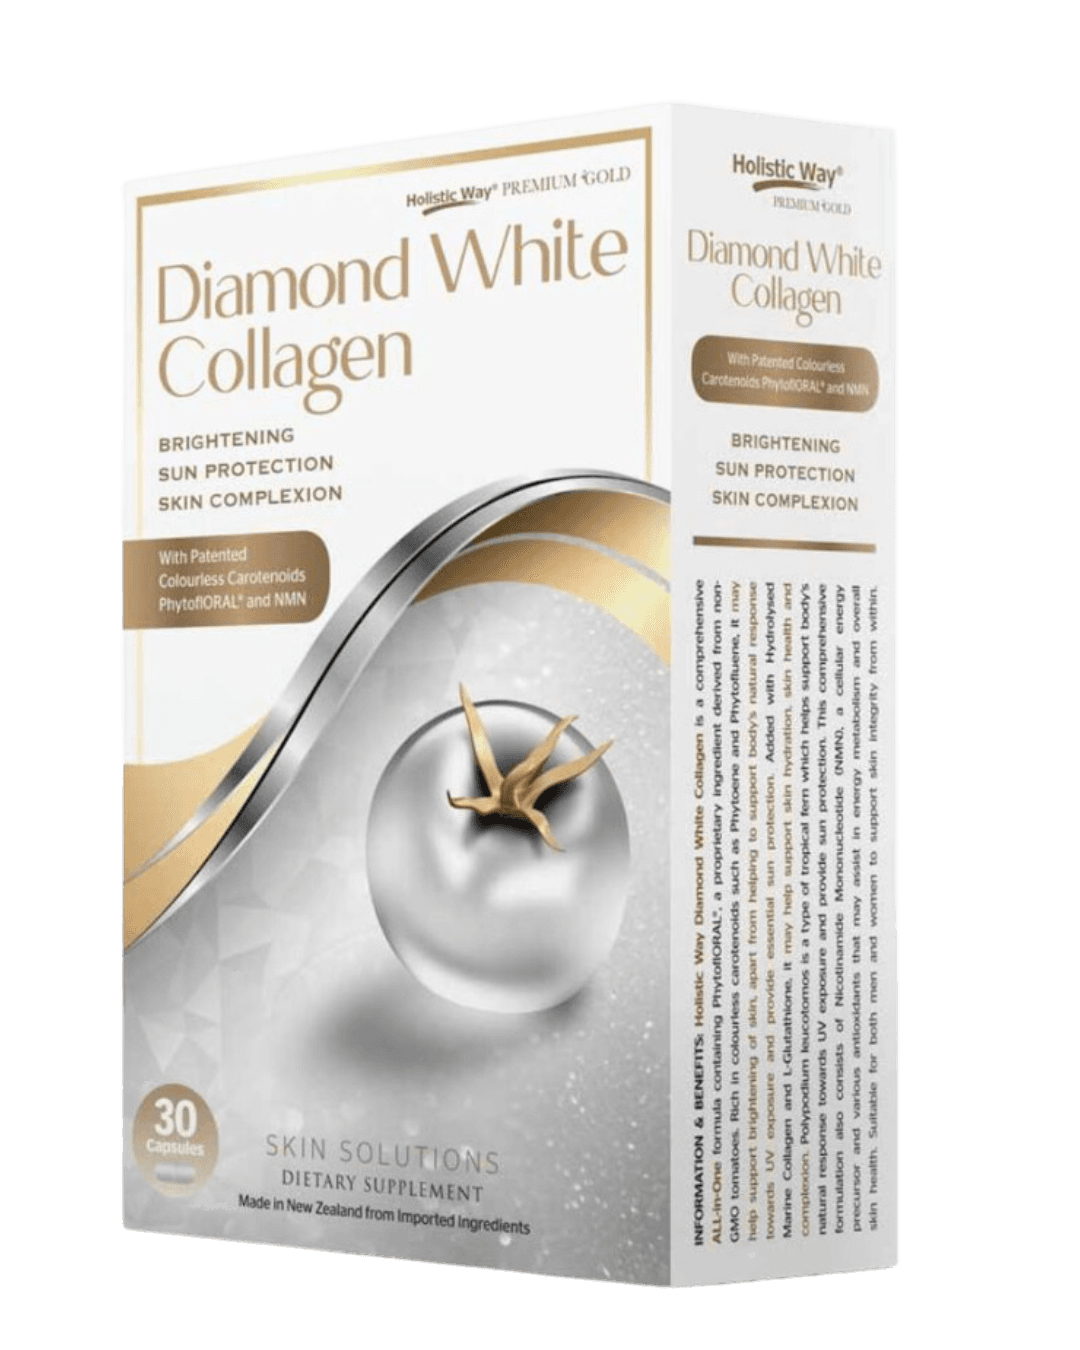 Holistic Way Premium Gold Diamond White Collagen